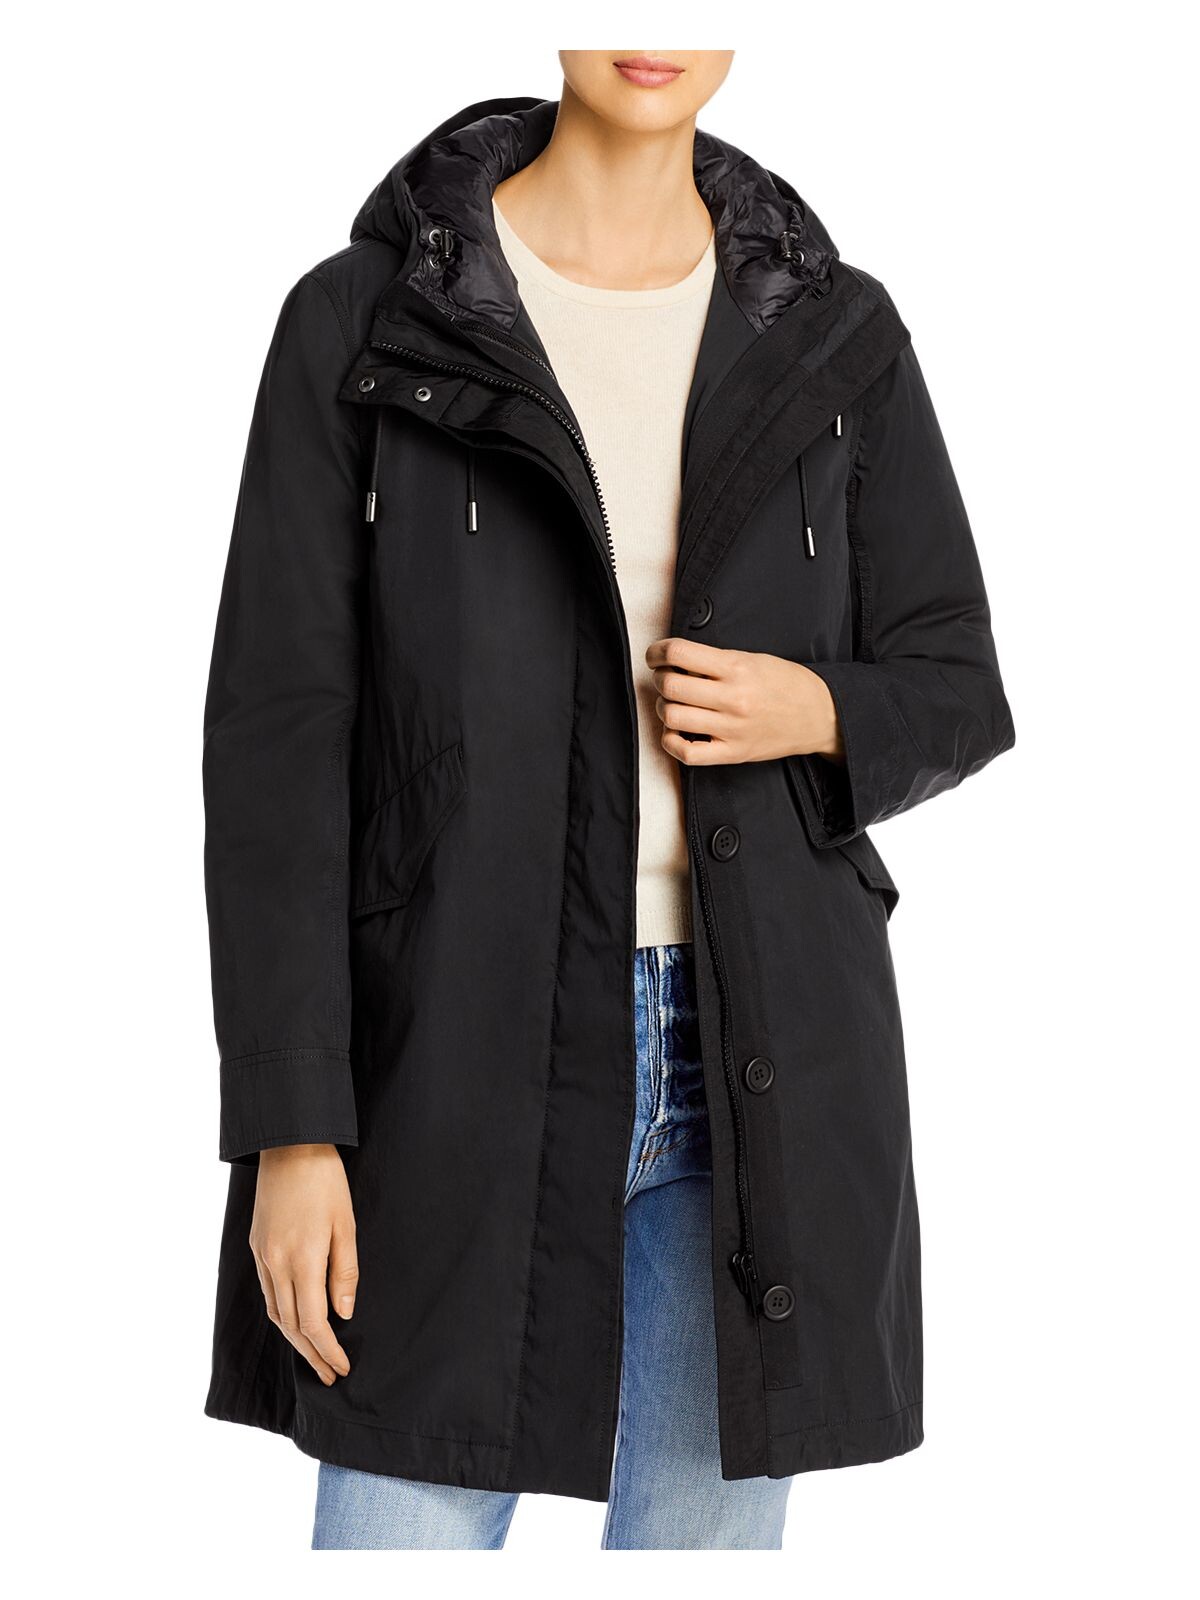 YS ARMY Womens Black Hooded Parka Winter Jacket Coat 40